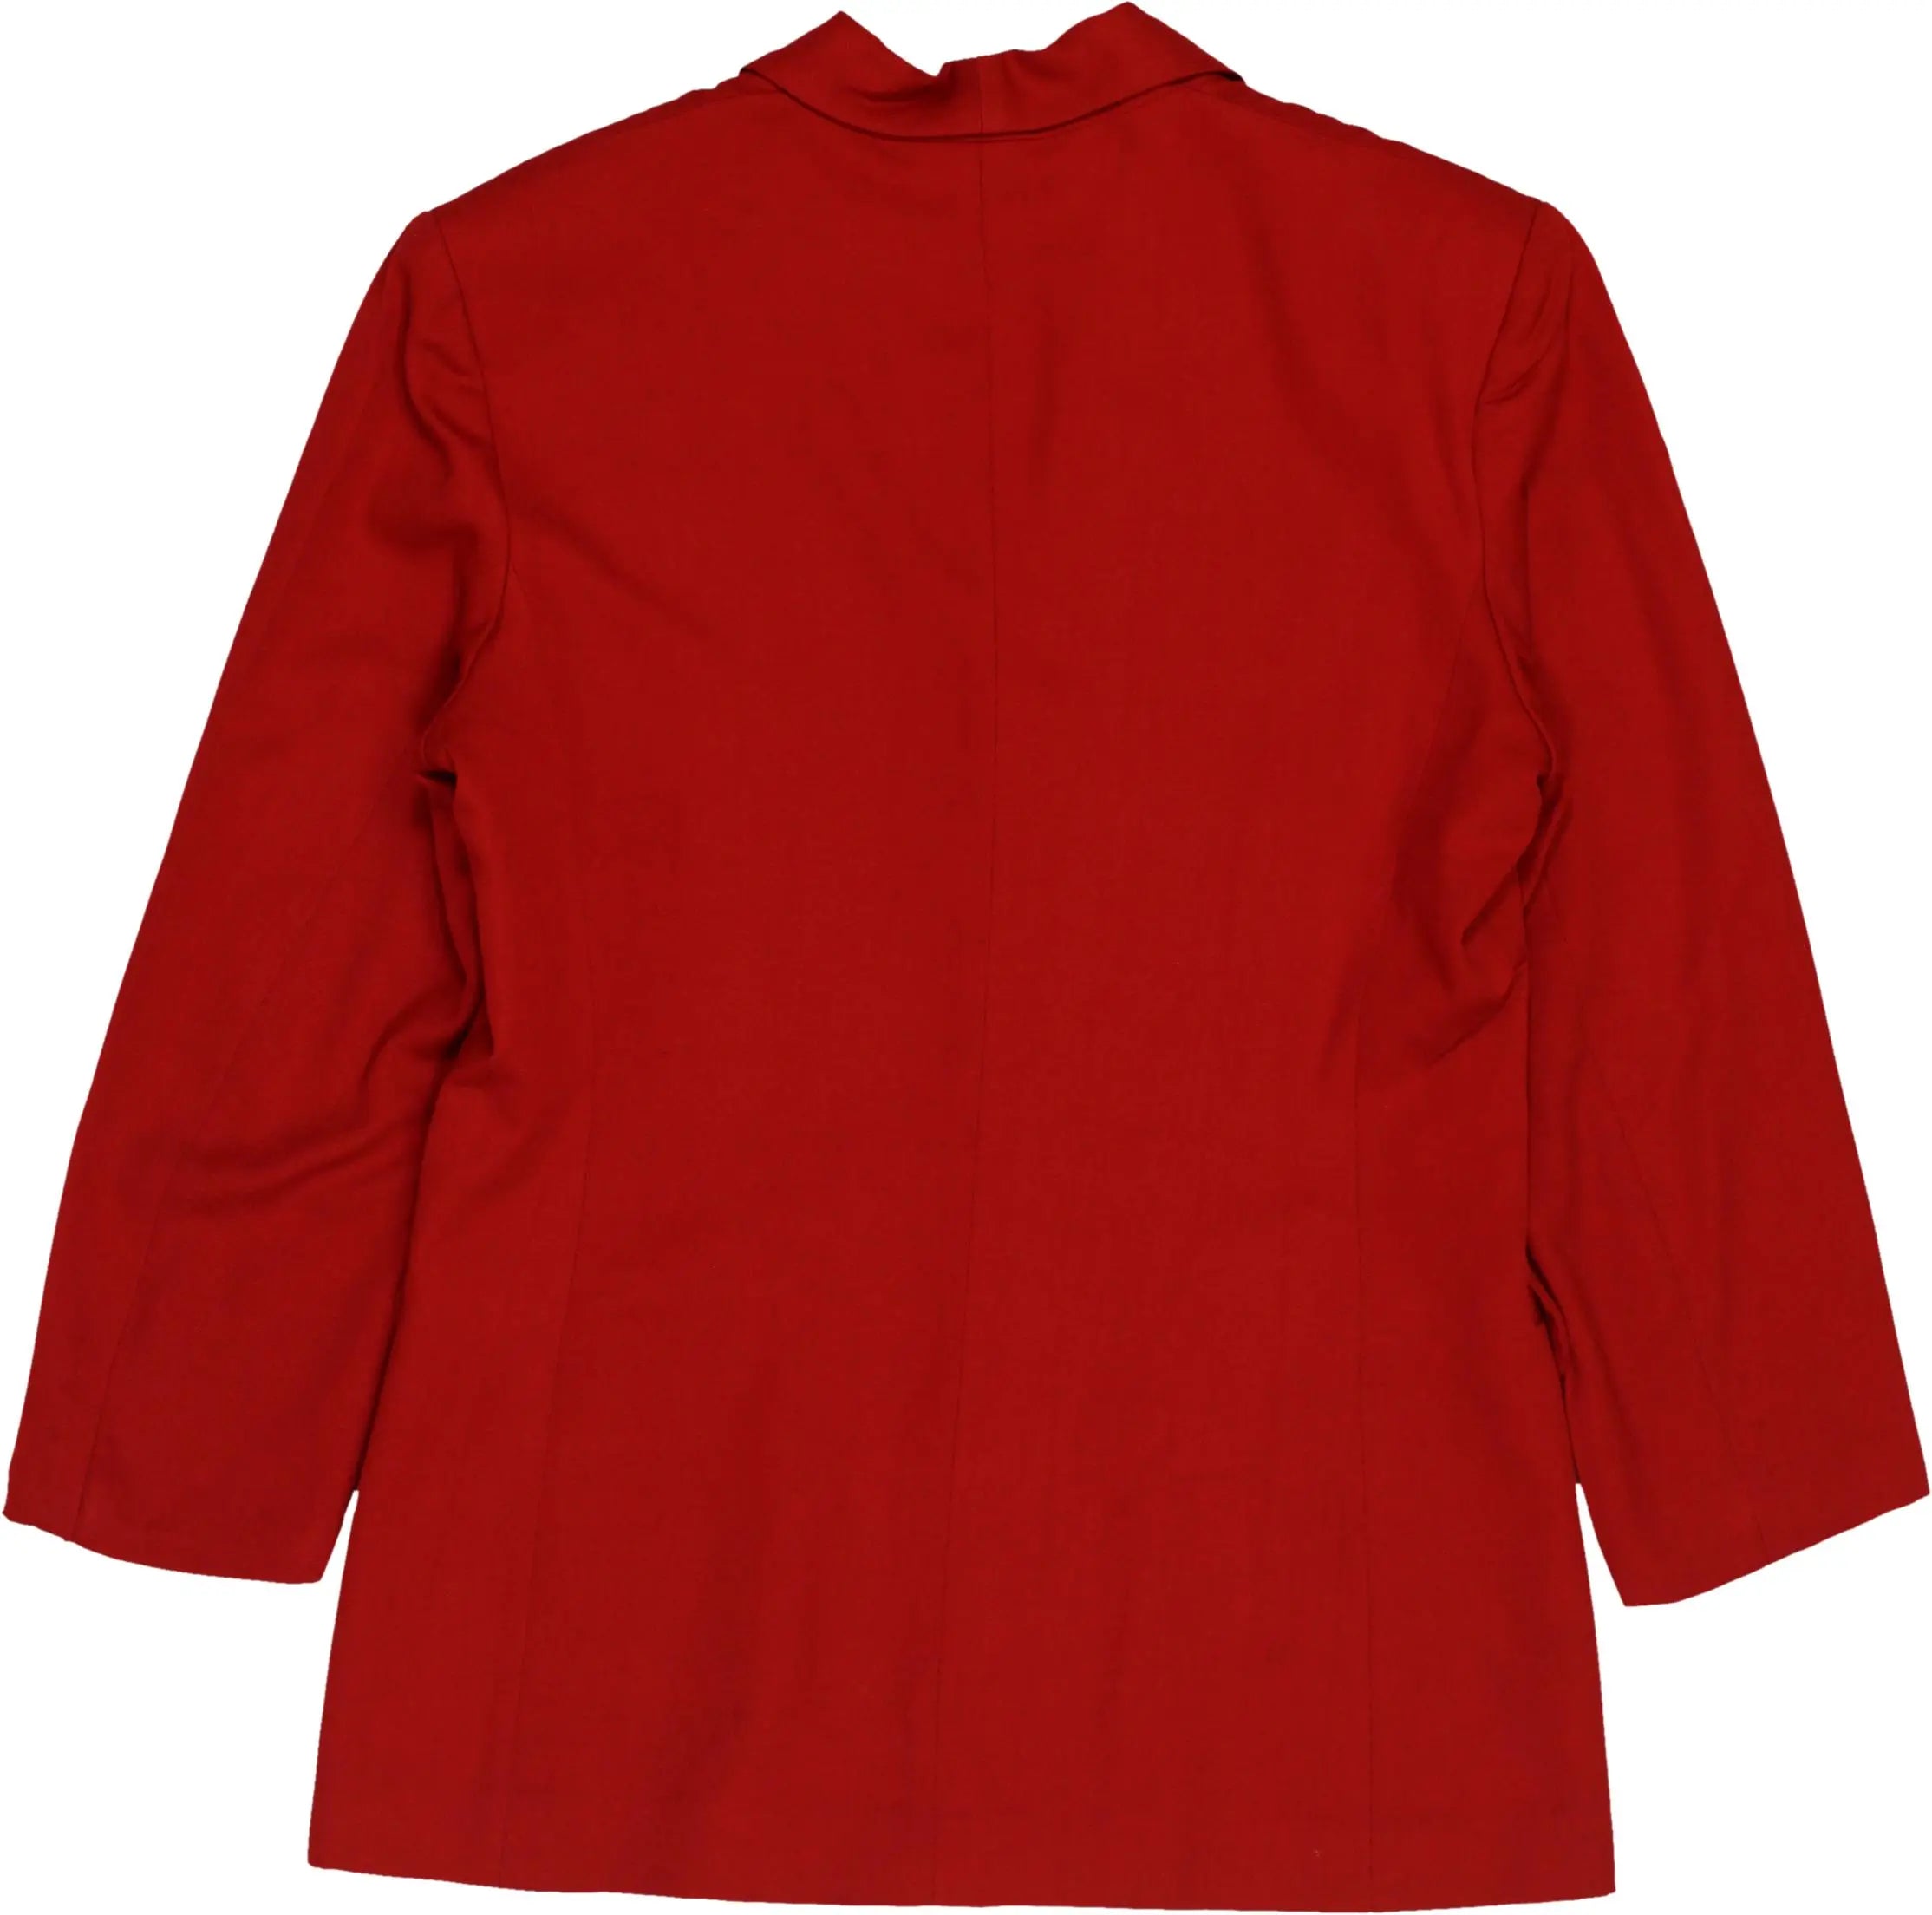 Liuda Lu - Red blazer- ThriftTale.com - Vintage and second handclothing